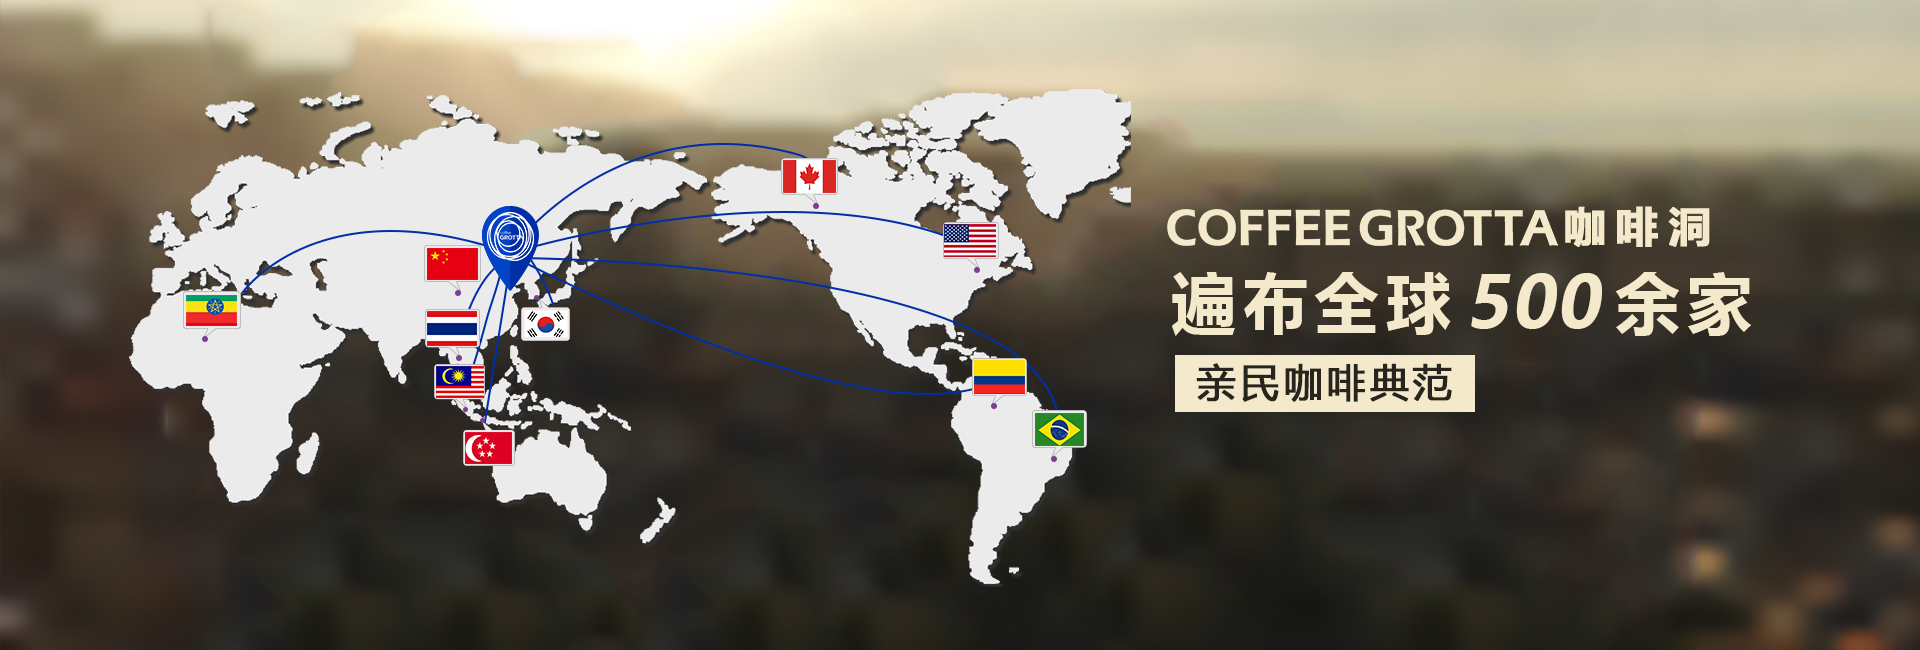 coffeegrotta咖啡洞咖啡厅品牌加盟全球500多家